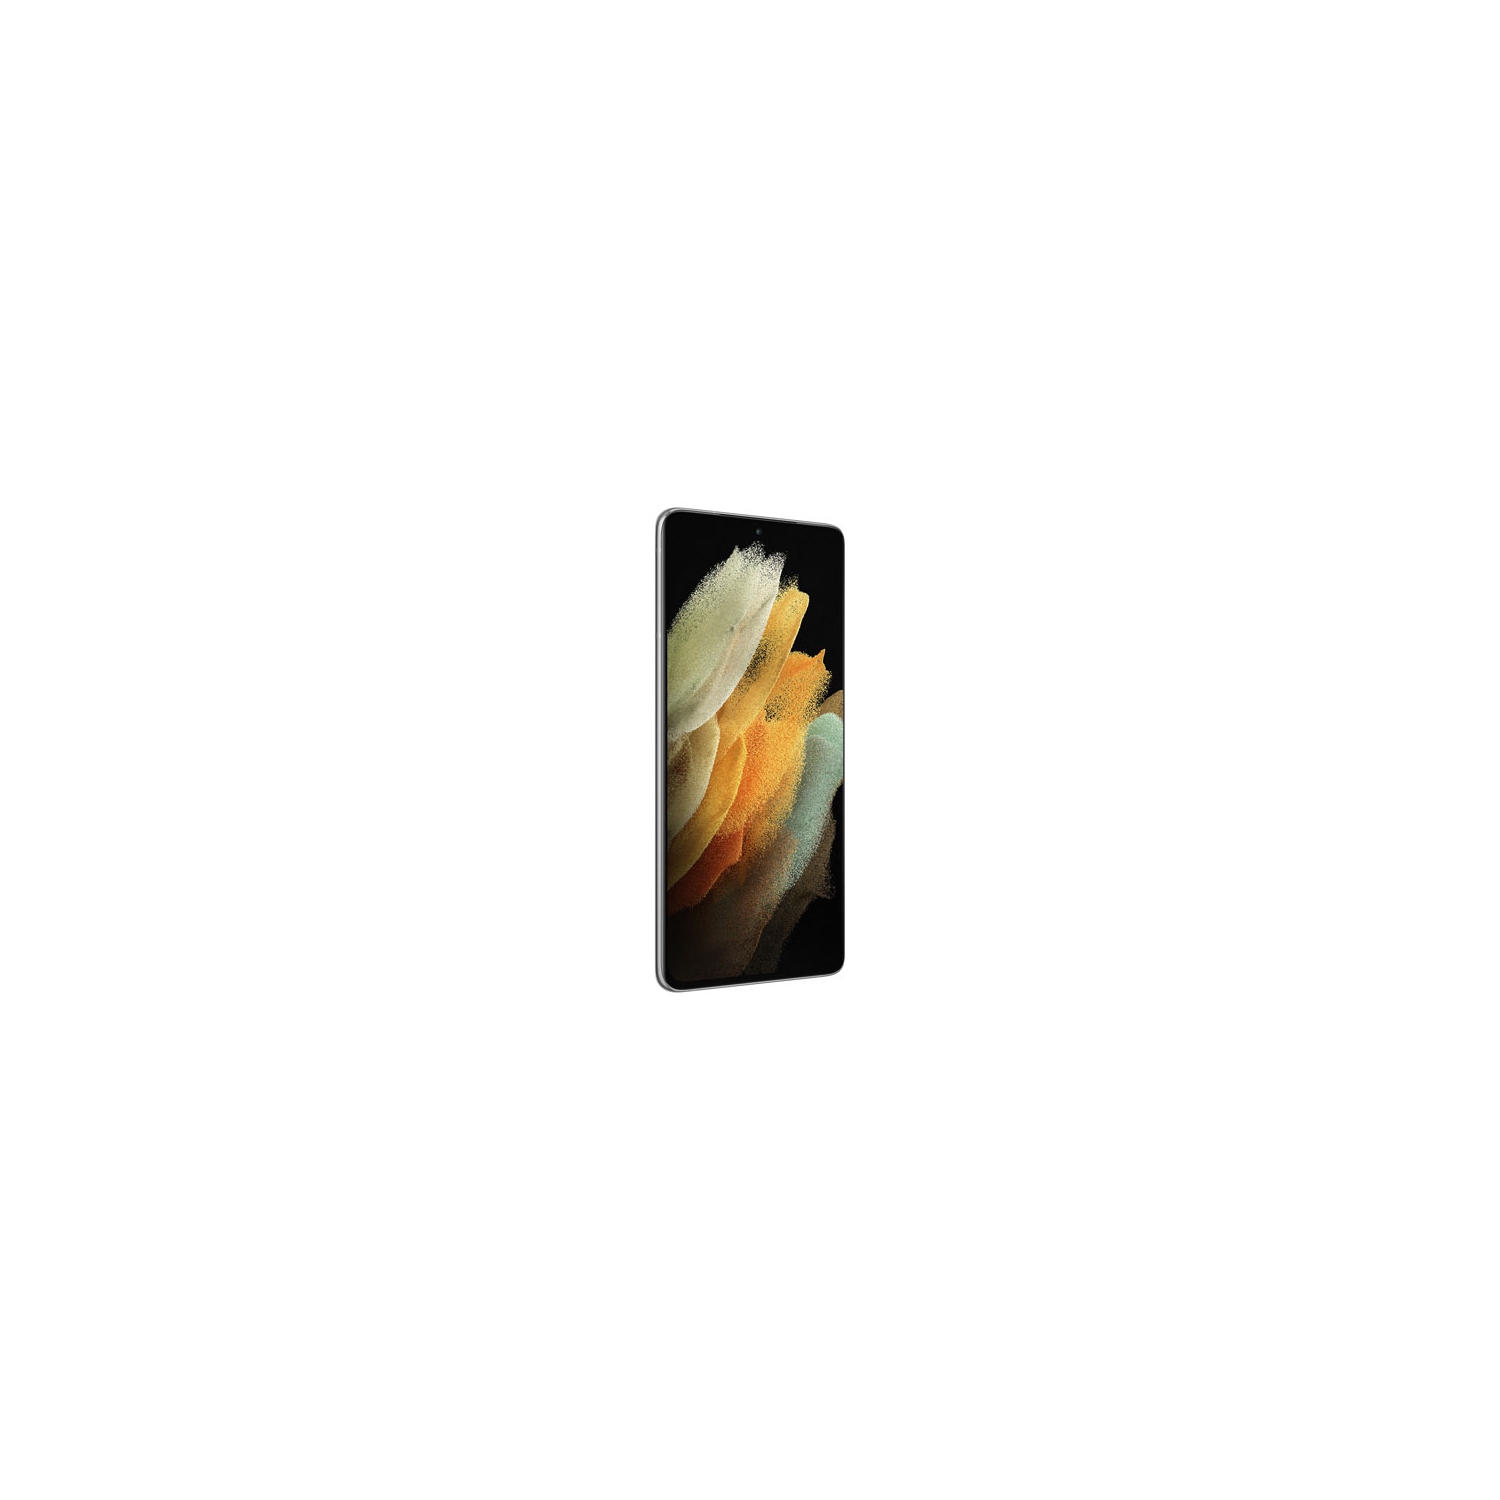 Refurbished (Fair) - Samsung Galaxy S21 Ultra 5G 128GB - Phantom Silver - Unlocked